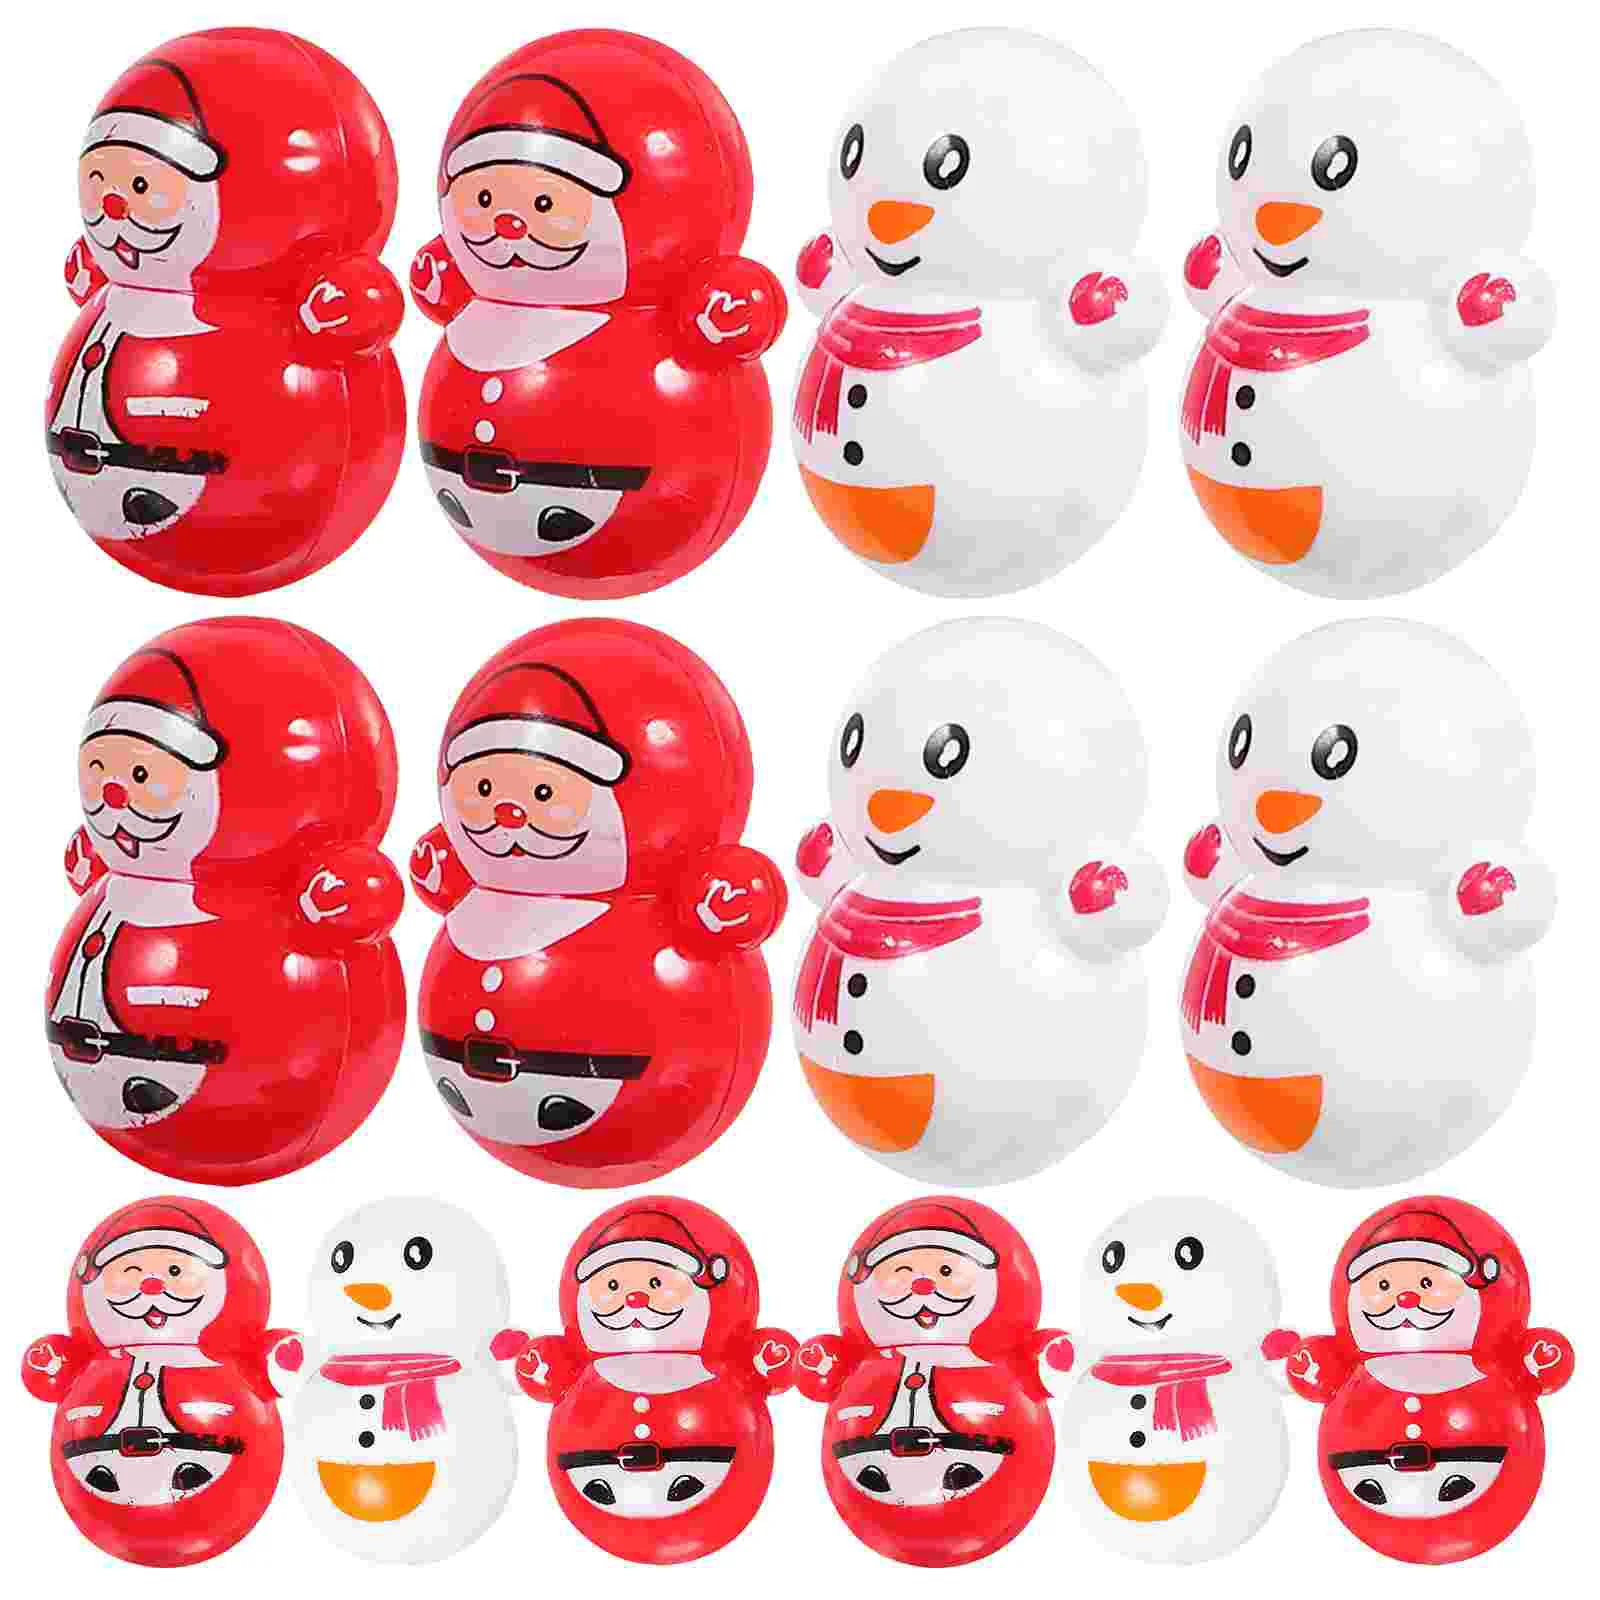 

Plastic Tumbler Toys Educational Snowmen Christmas Themed Desktop Decor Home Decors Santa Claus Ornaments Birthday Gifts